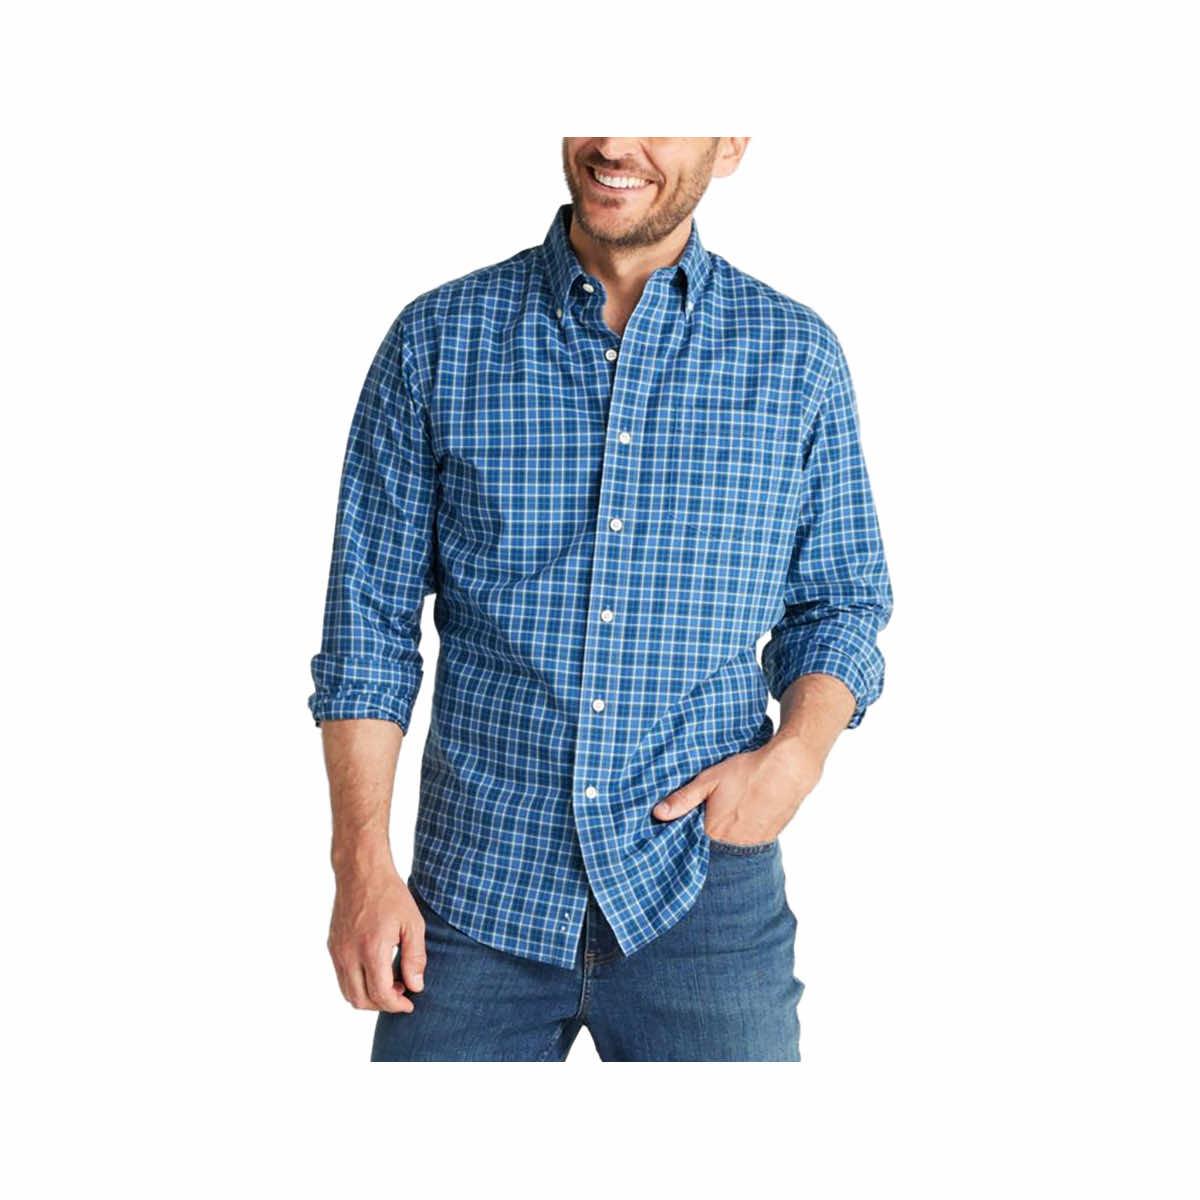 Mast General Store  Men's Wrinkle-Free Long Sleeve Kennebunk Sport Shirt